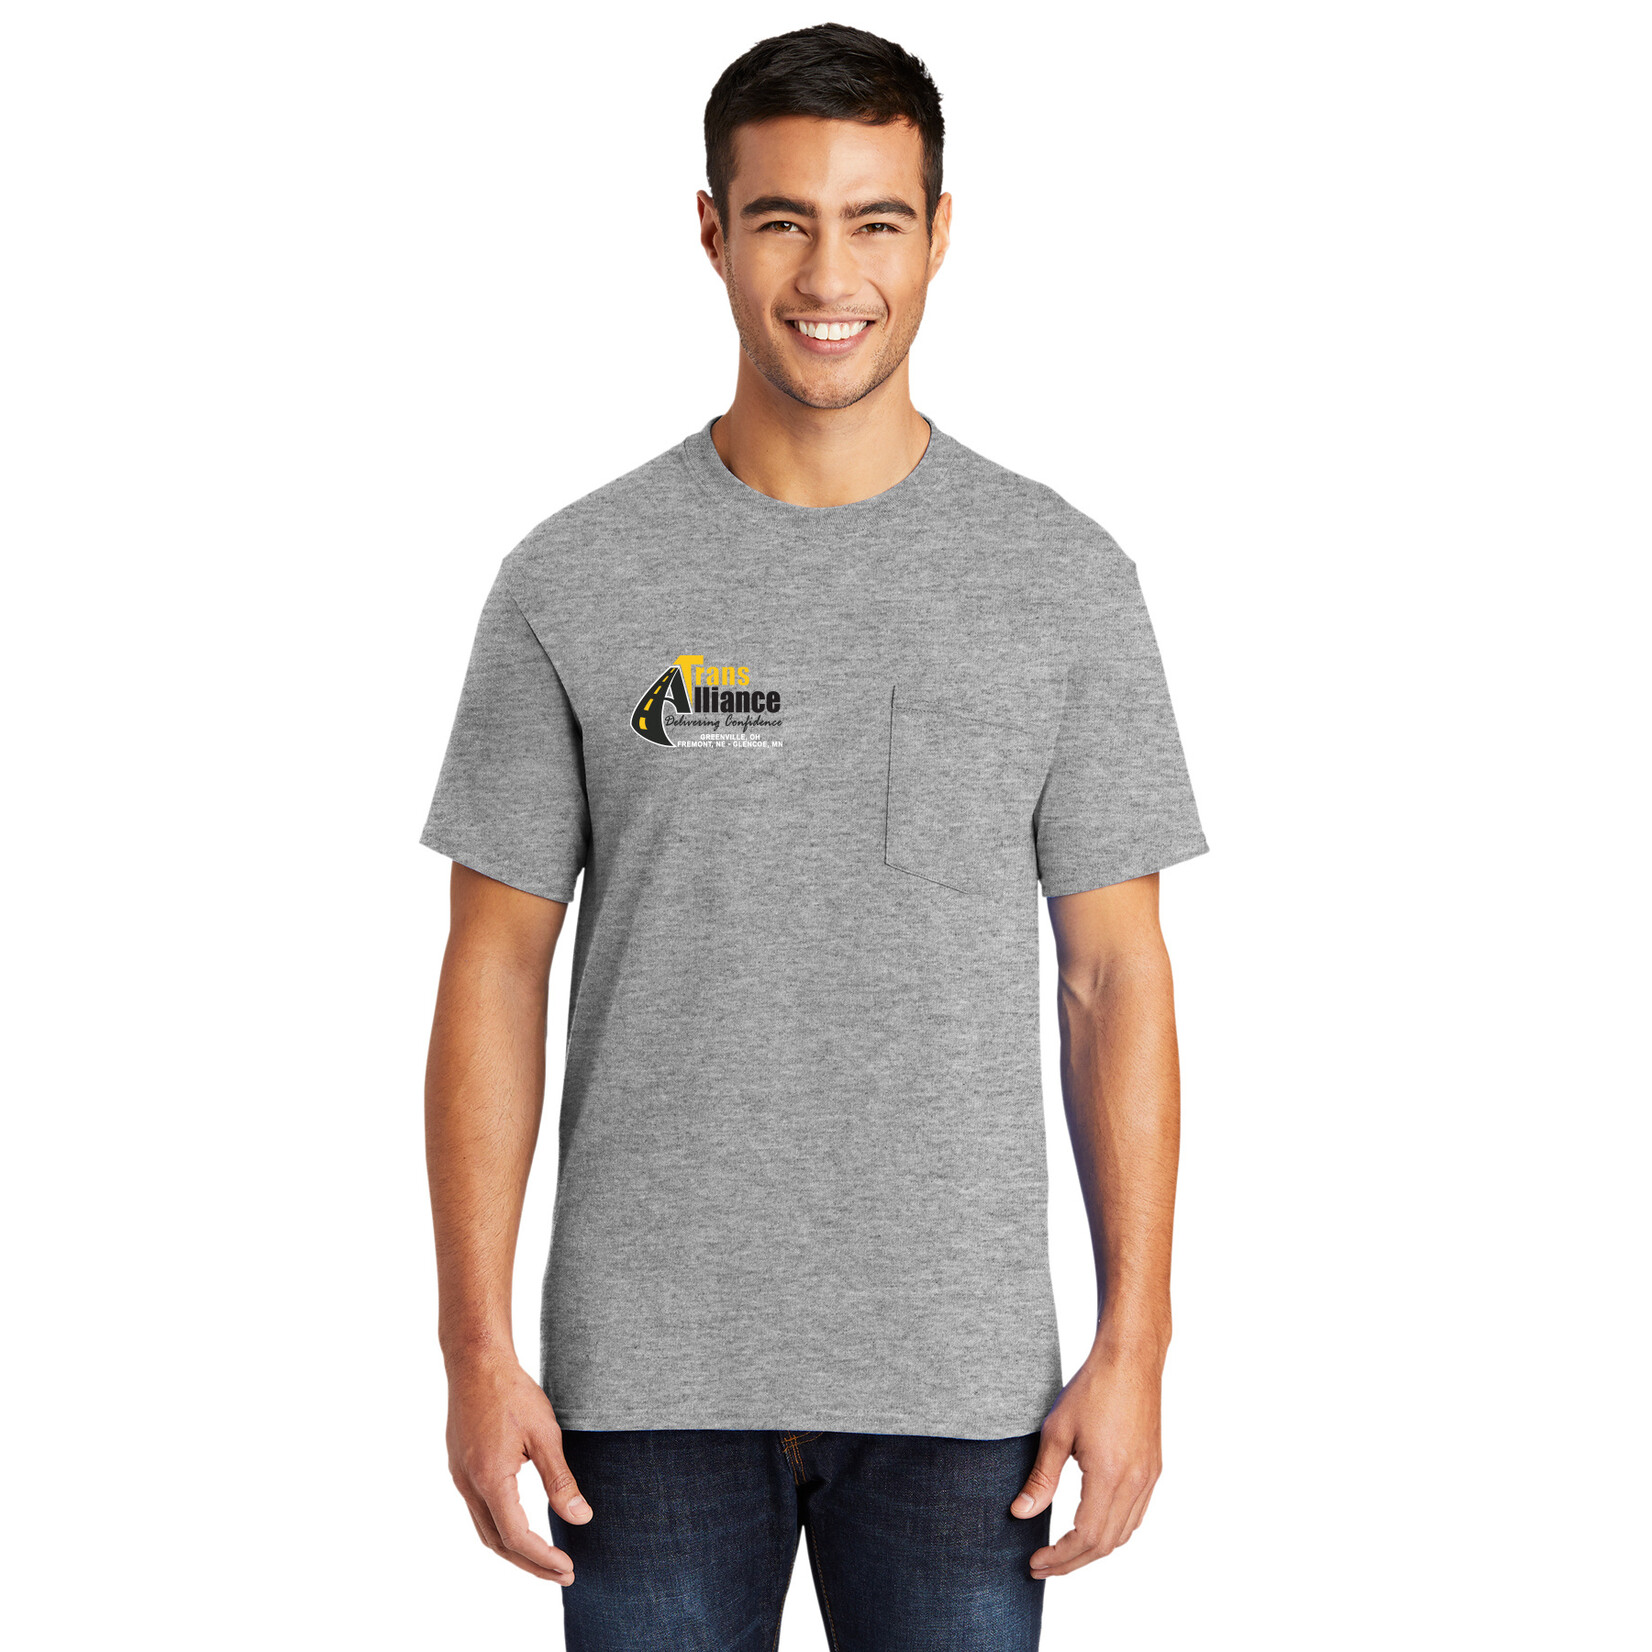 Trans Alliance_Pocket T-shirt